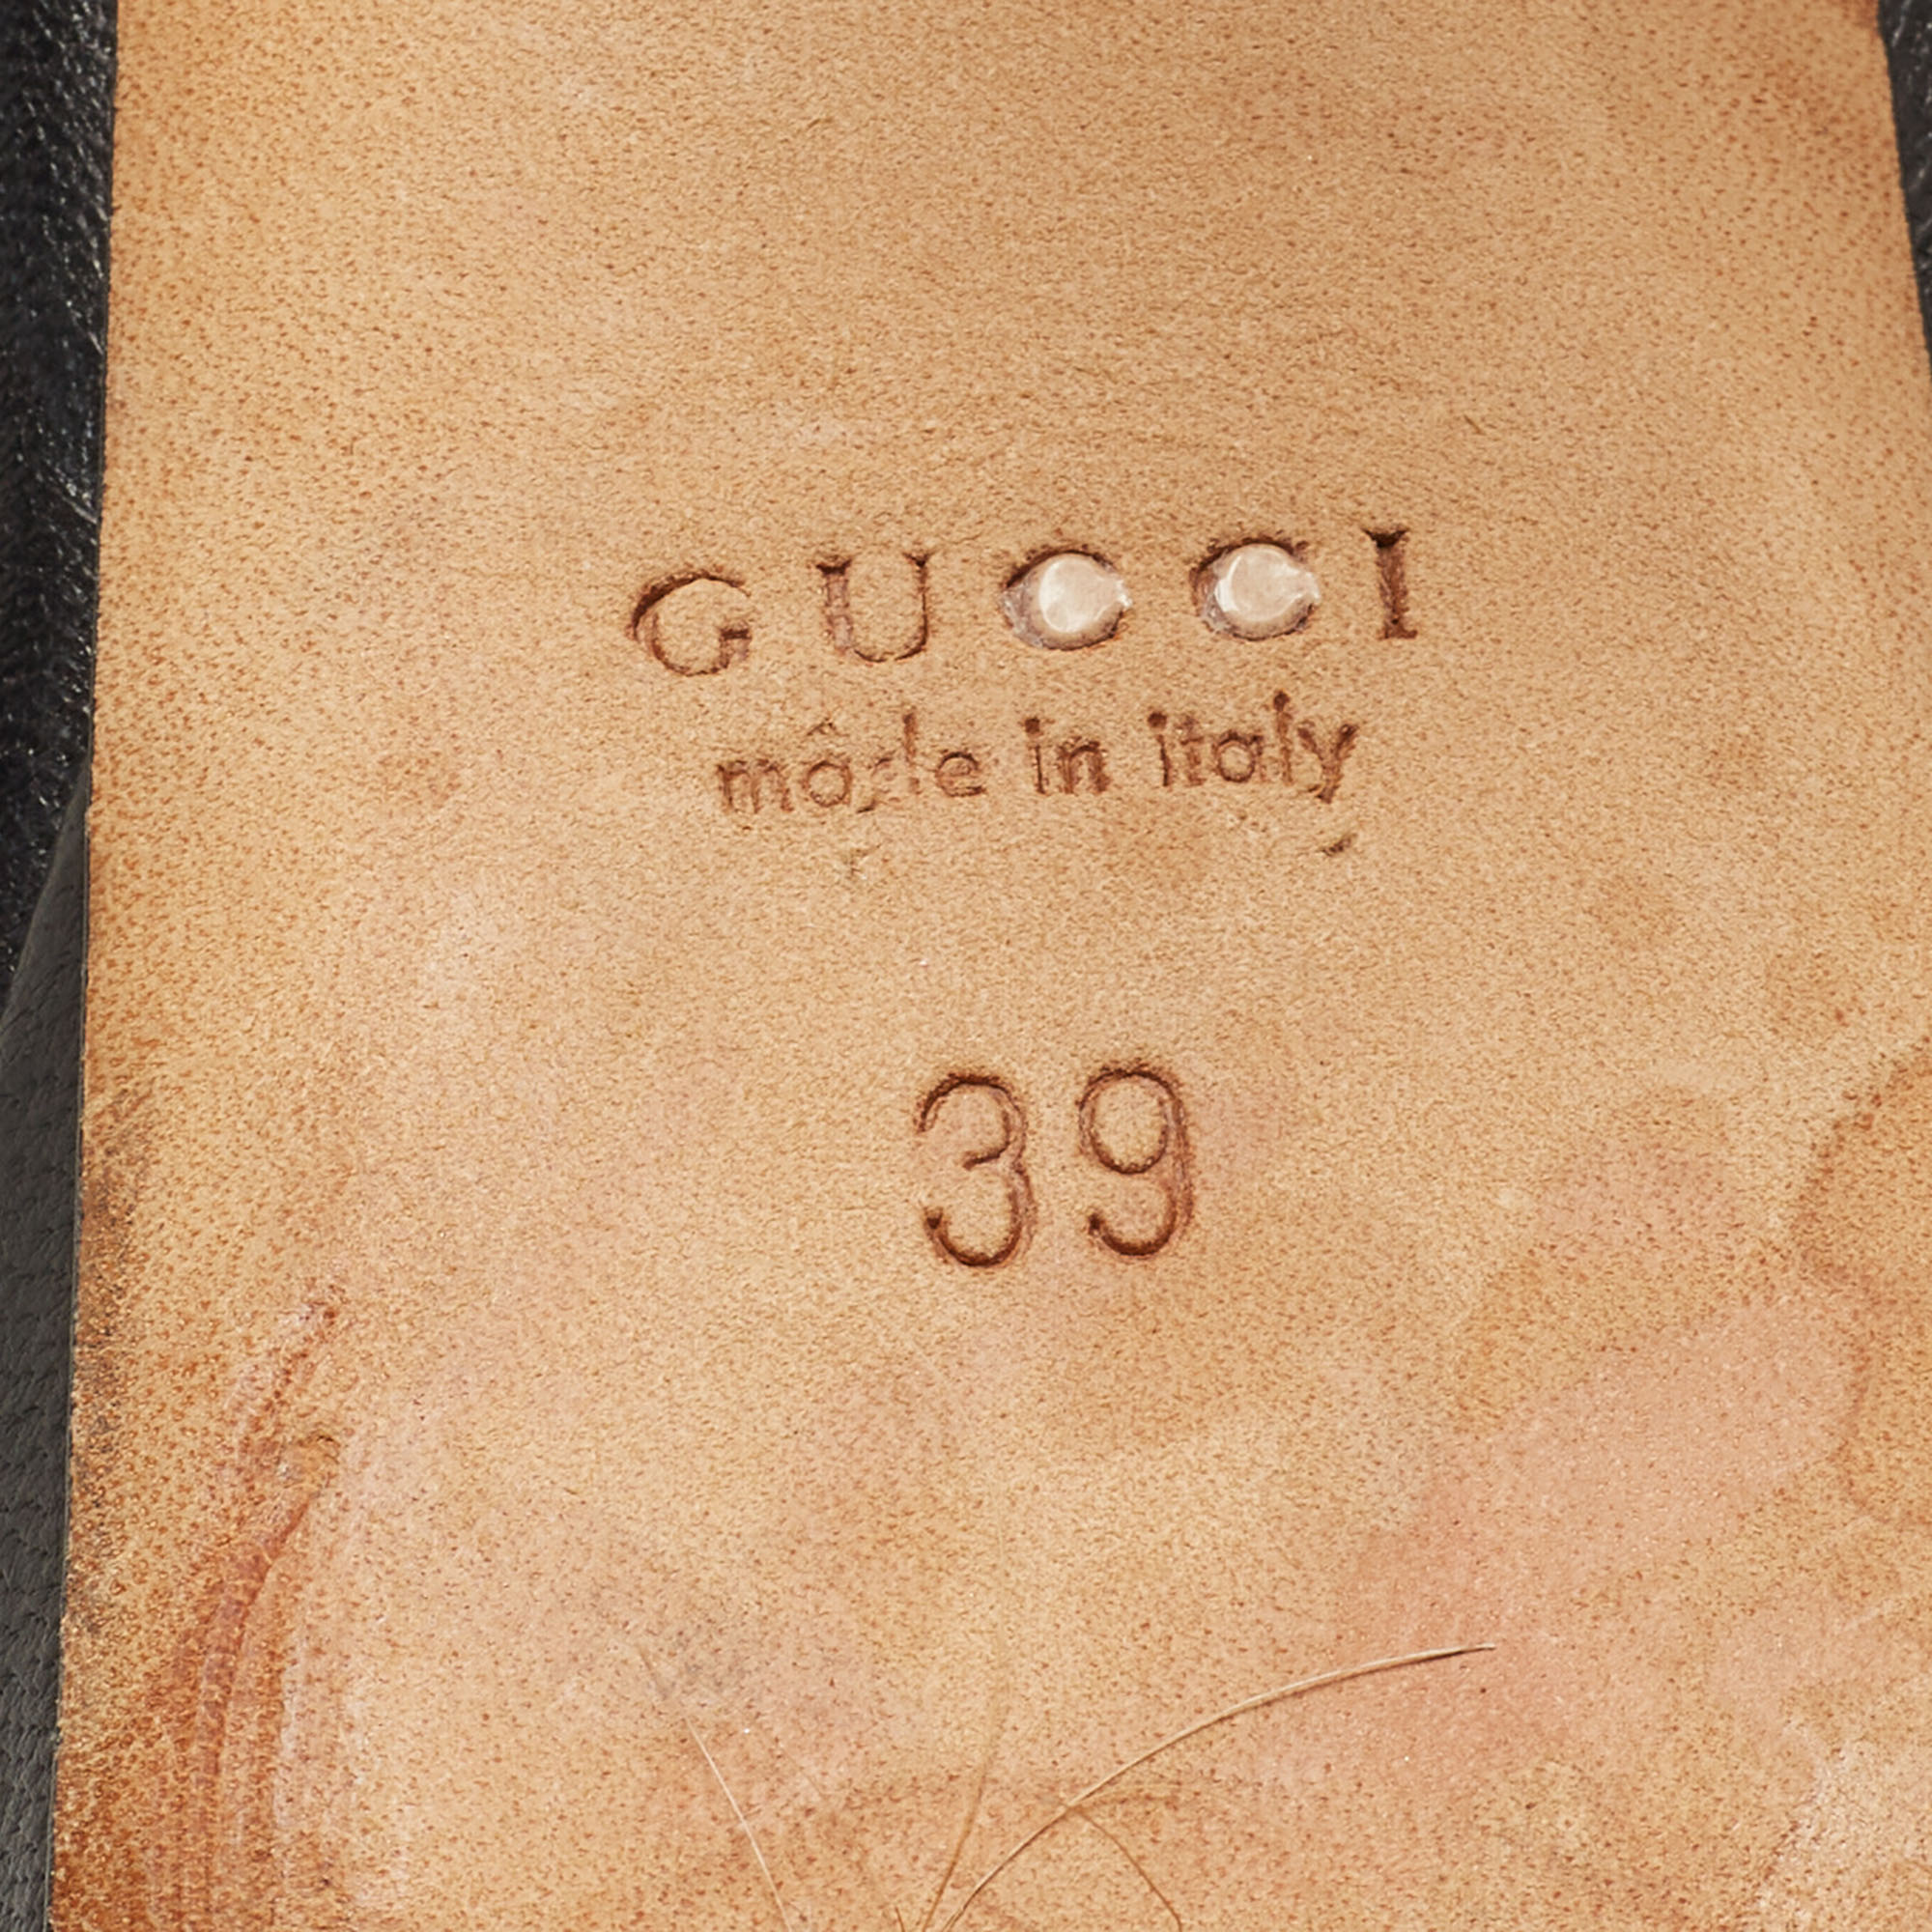 Gucci Black Leather Horsebit Peep Toe Pumps Size 39